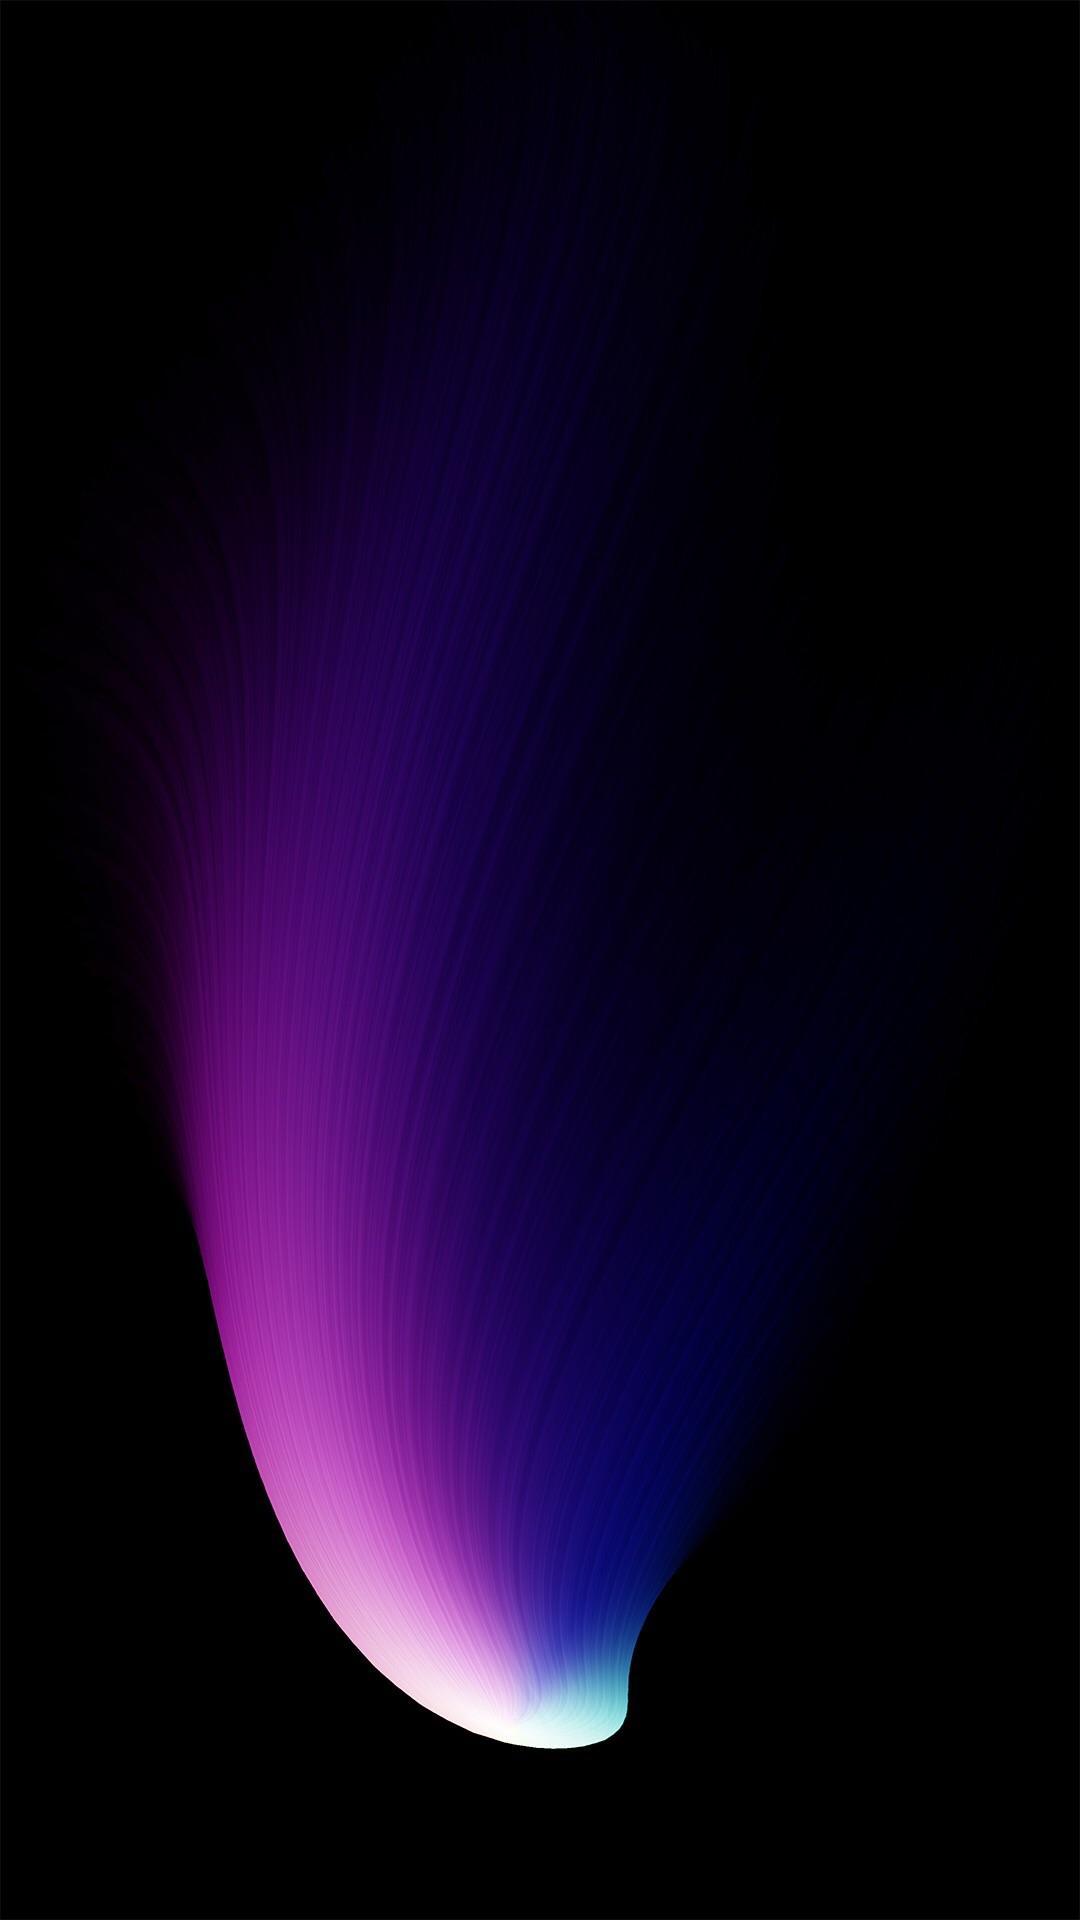 Cool gradient effect wallpaper when waking iPhone X lockscreen